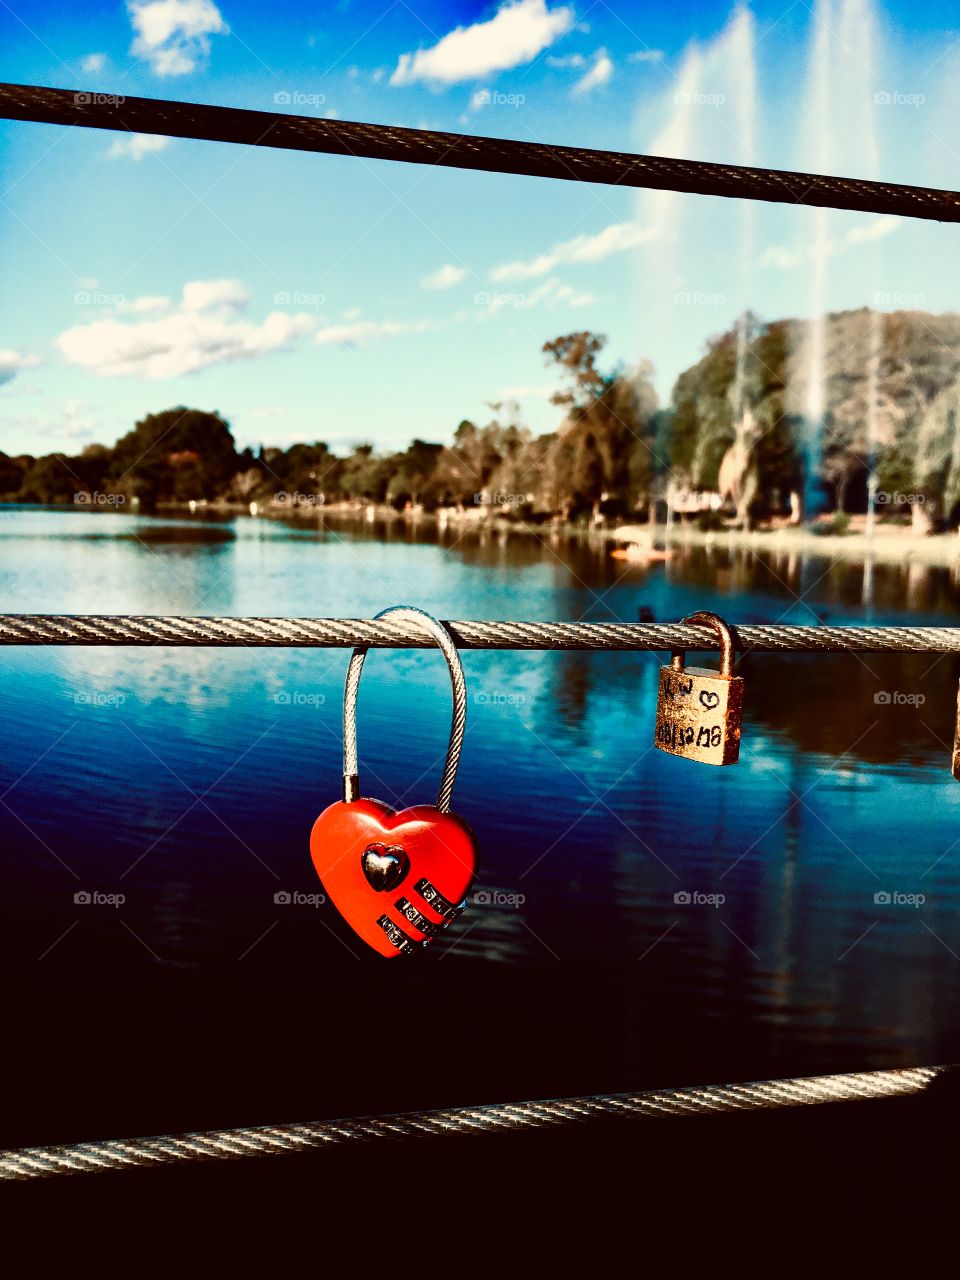 Love locks on the bridge over the lake. 